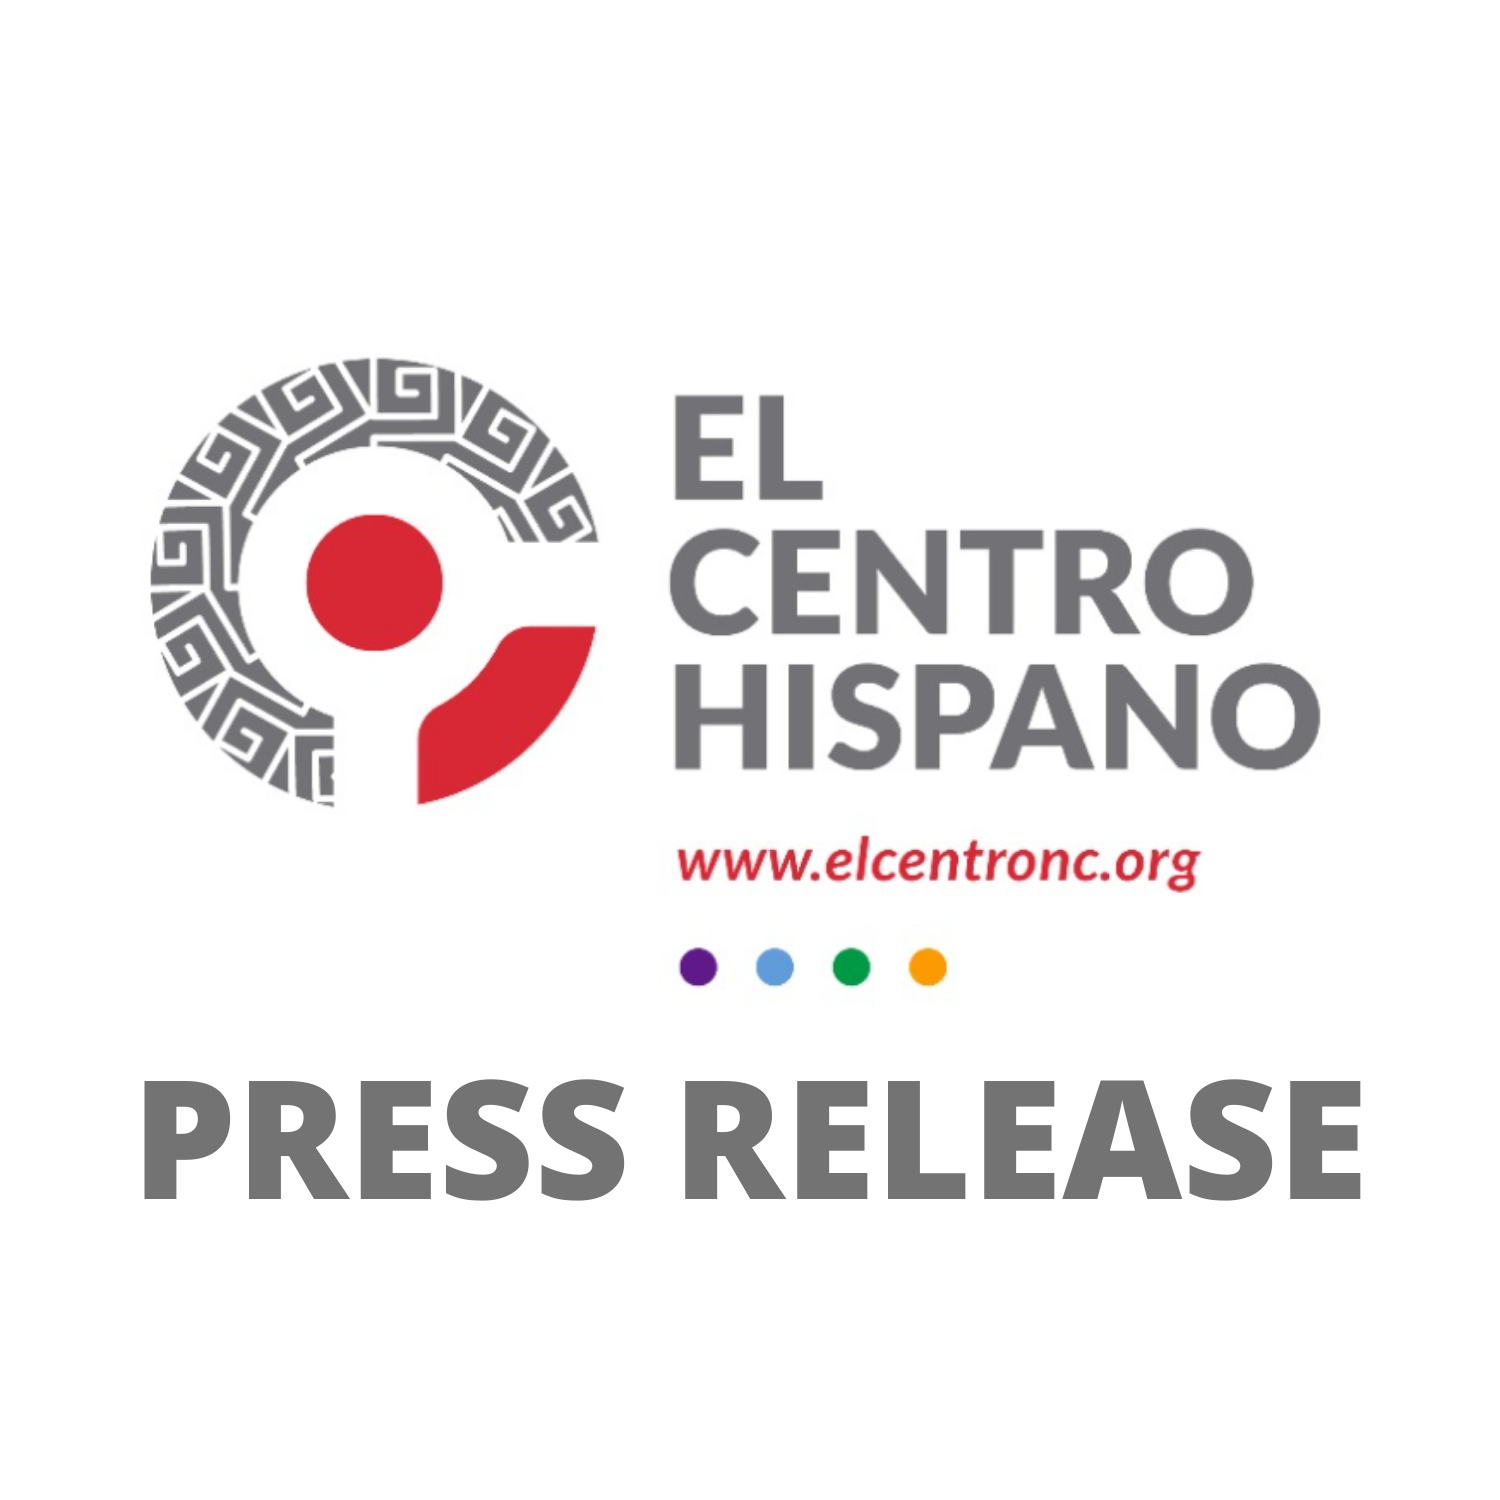 El Centro Hispano Joins The COVID-19 Community Health Worker Program